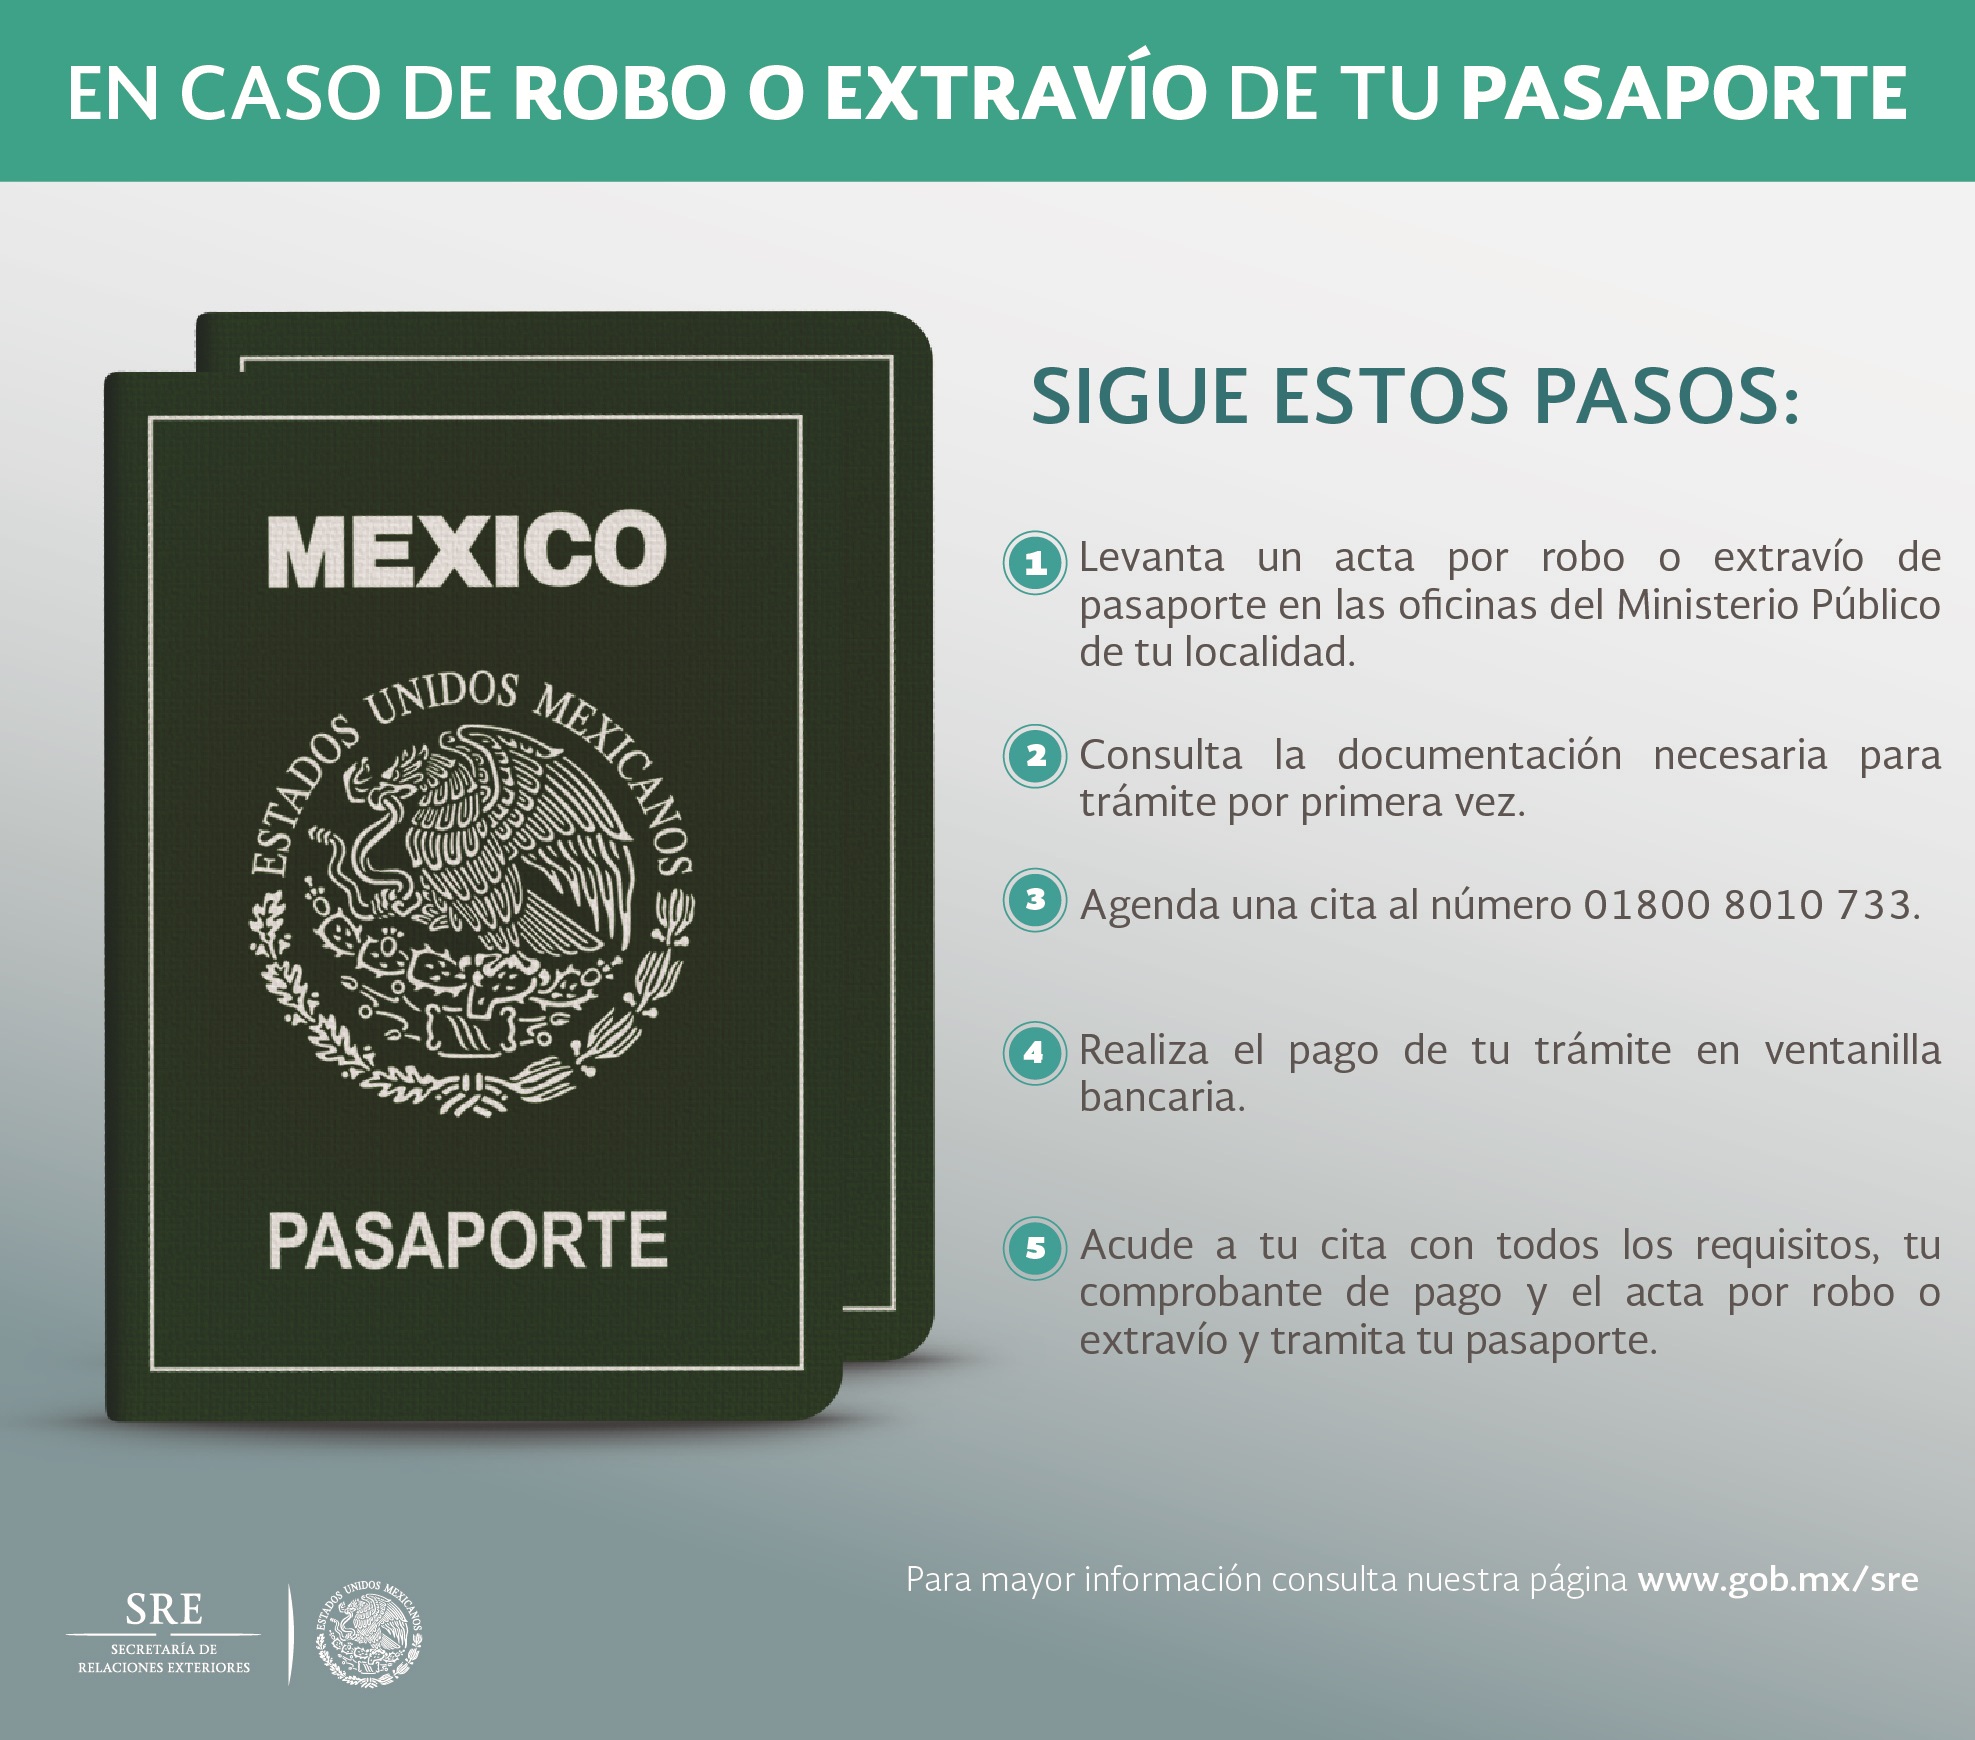 /cms/uploads/image/file/219160/pasaporte_3.jpg